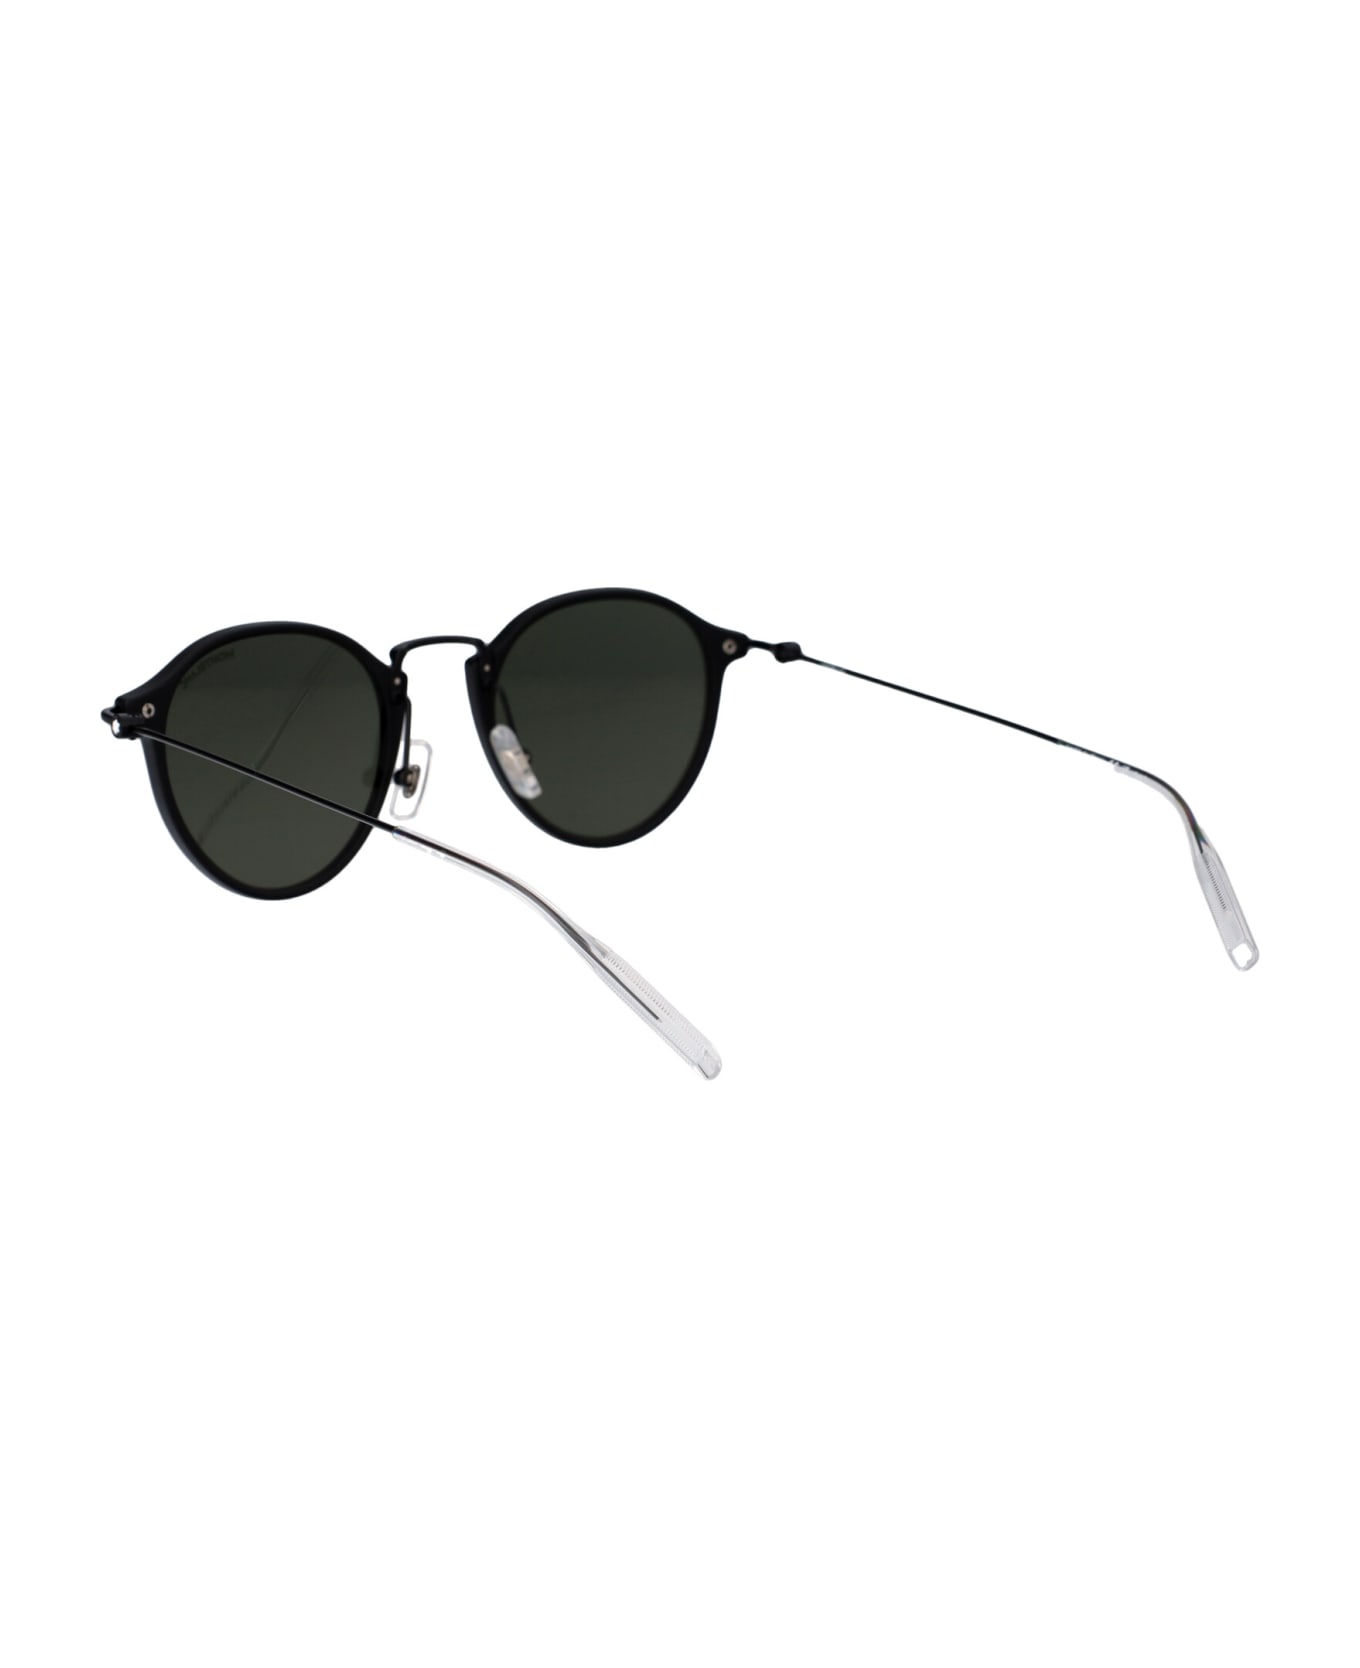 Montblanc Mb0294s Sunglasses - 005 BLACK BLACK GREY サングラス